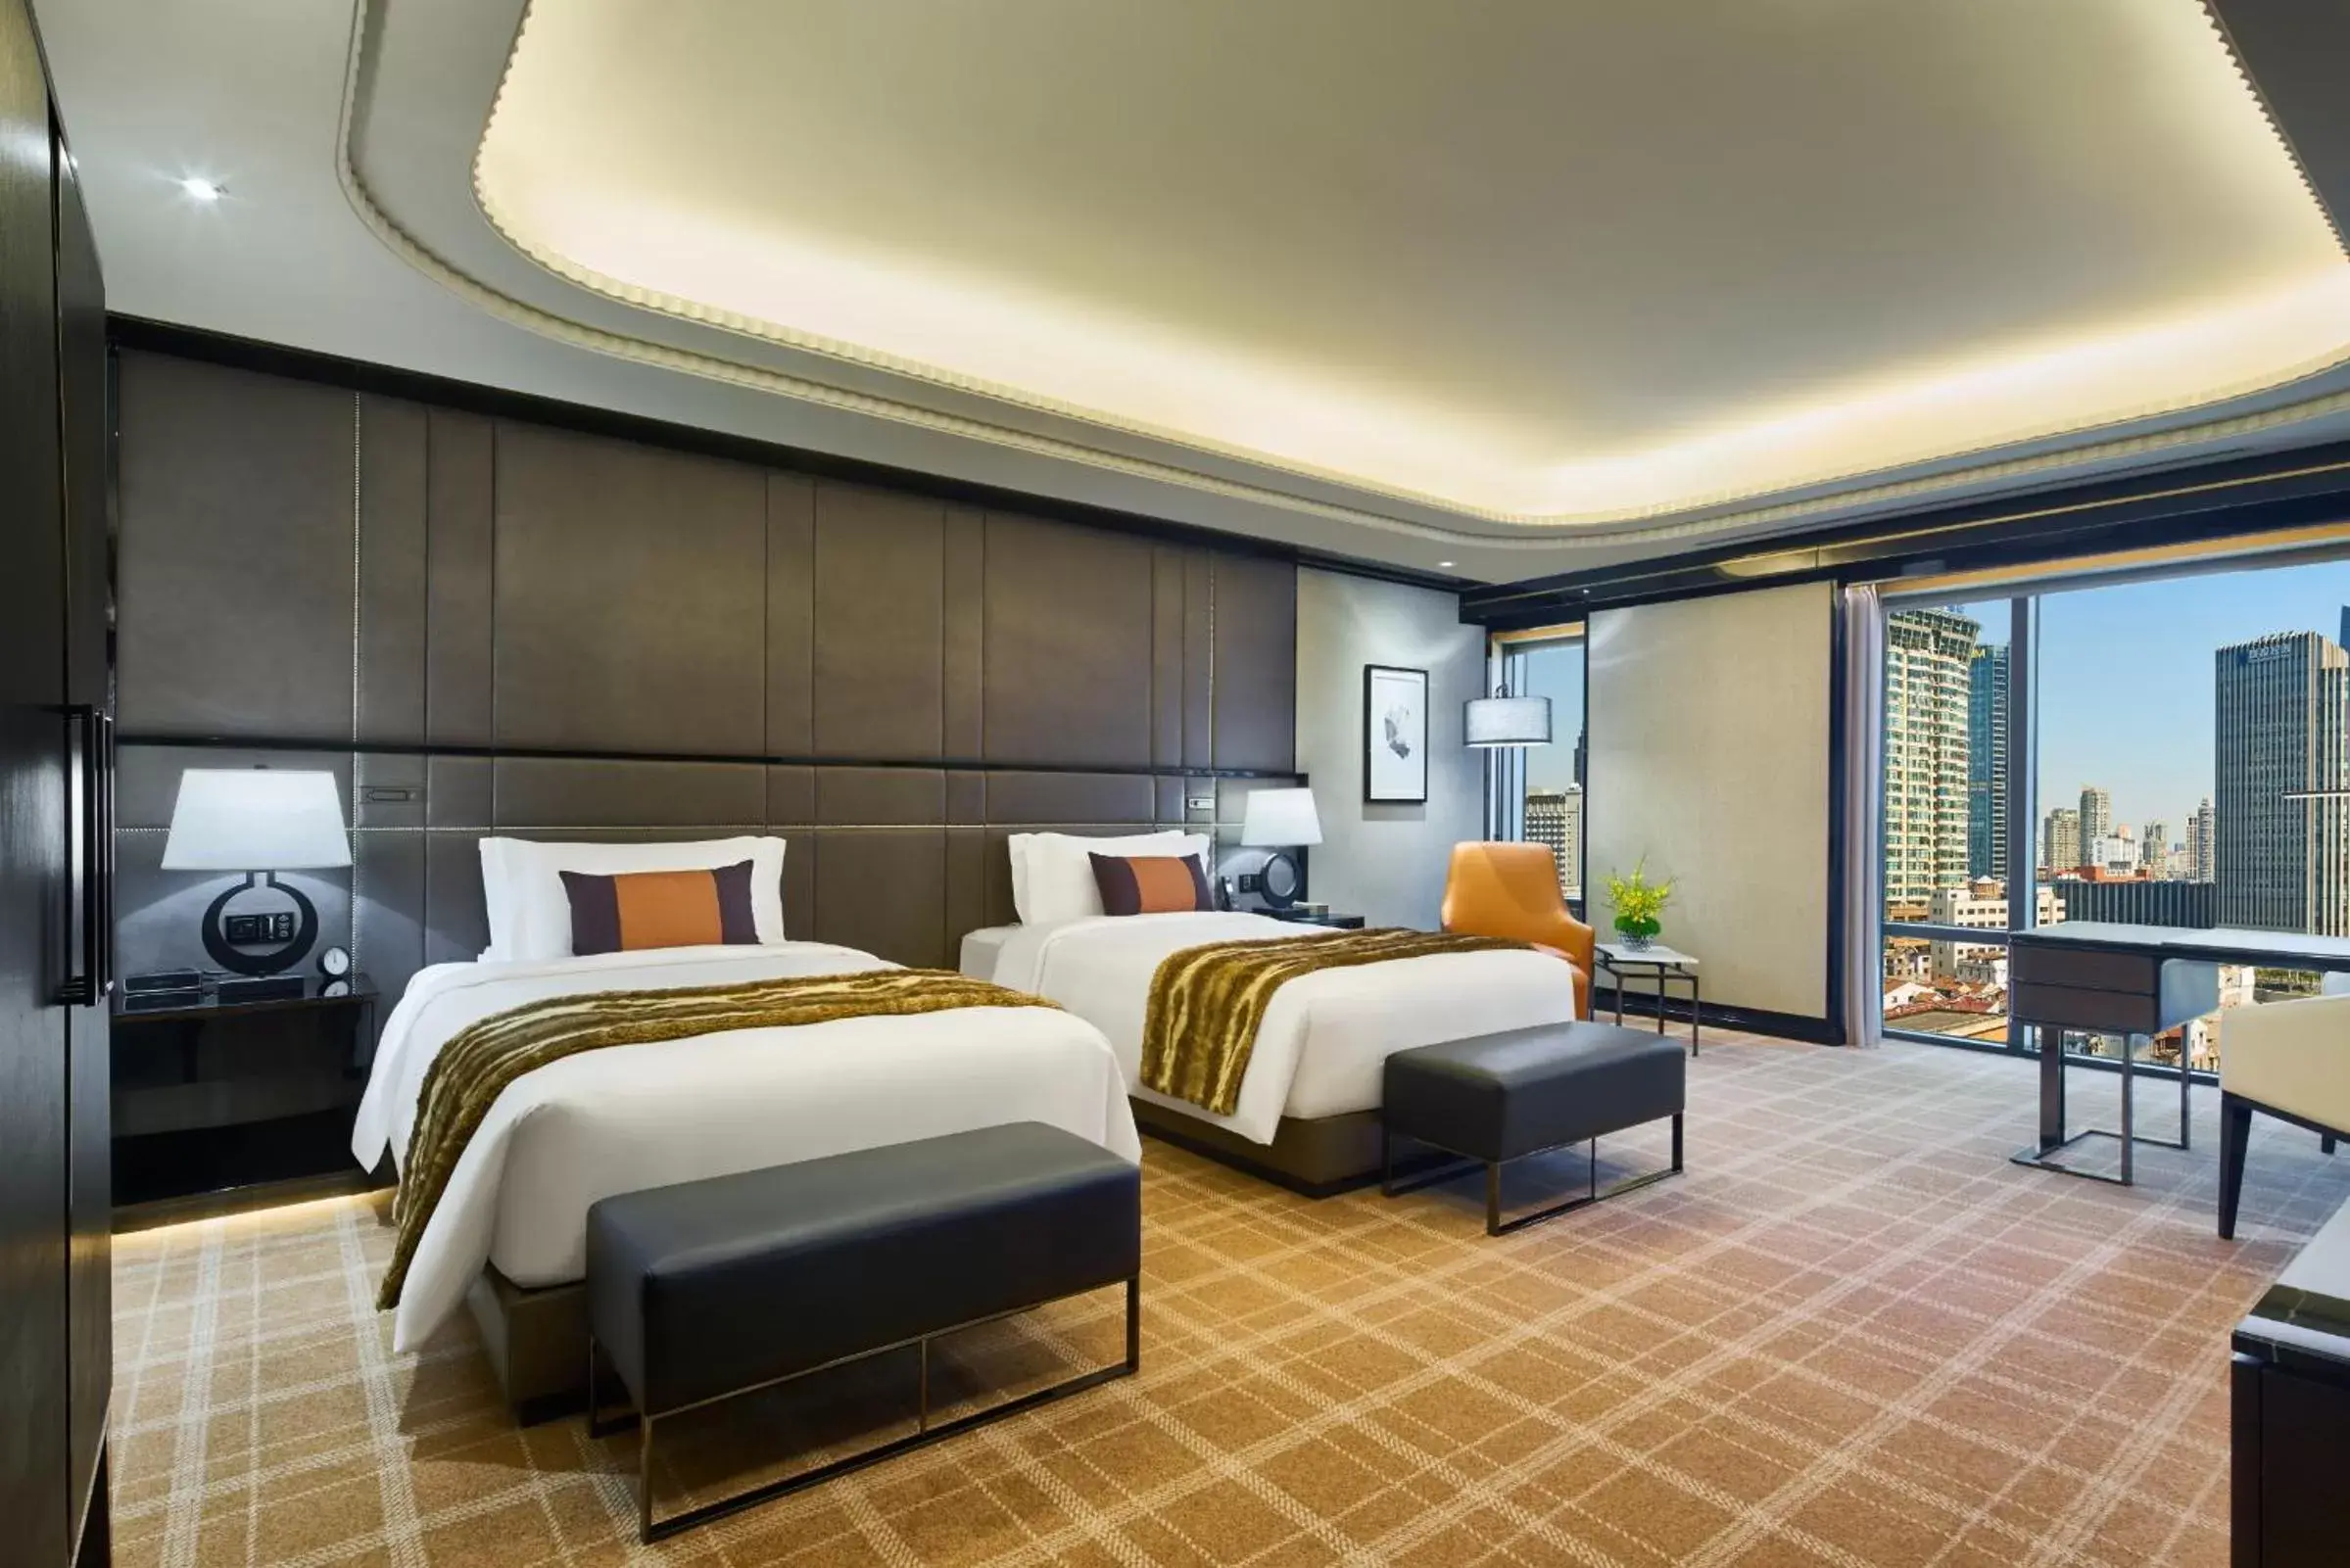 Bedroom in Bellagio by MGM Shanghai - on the bund